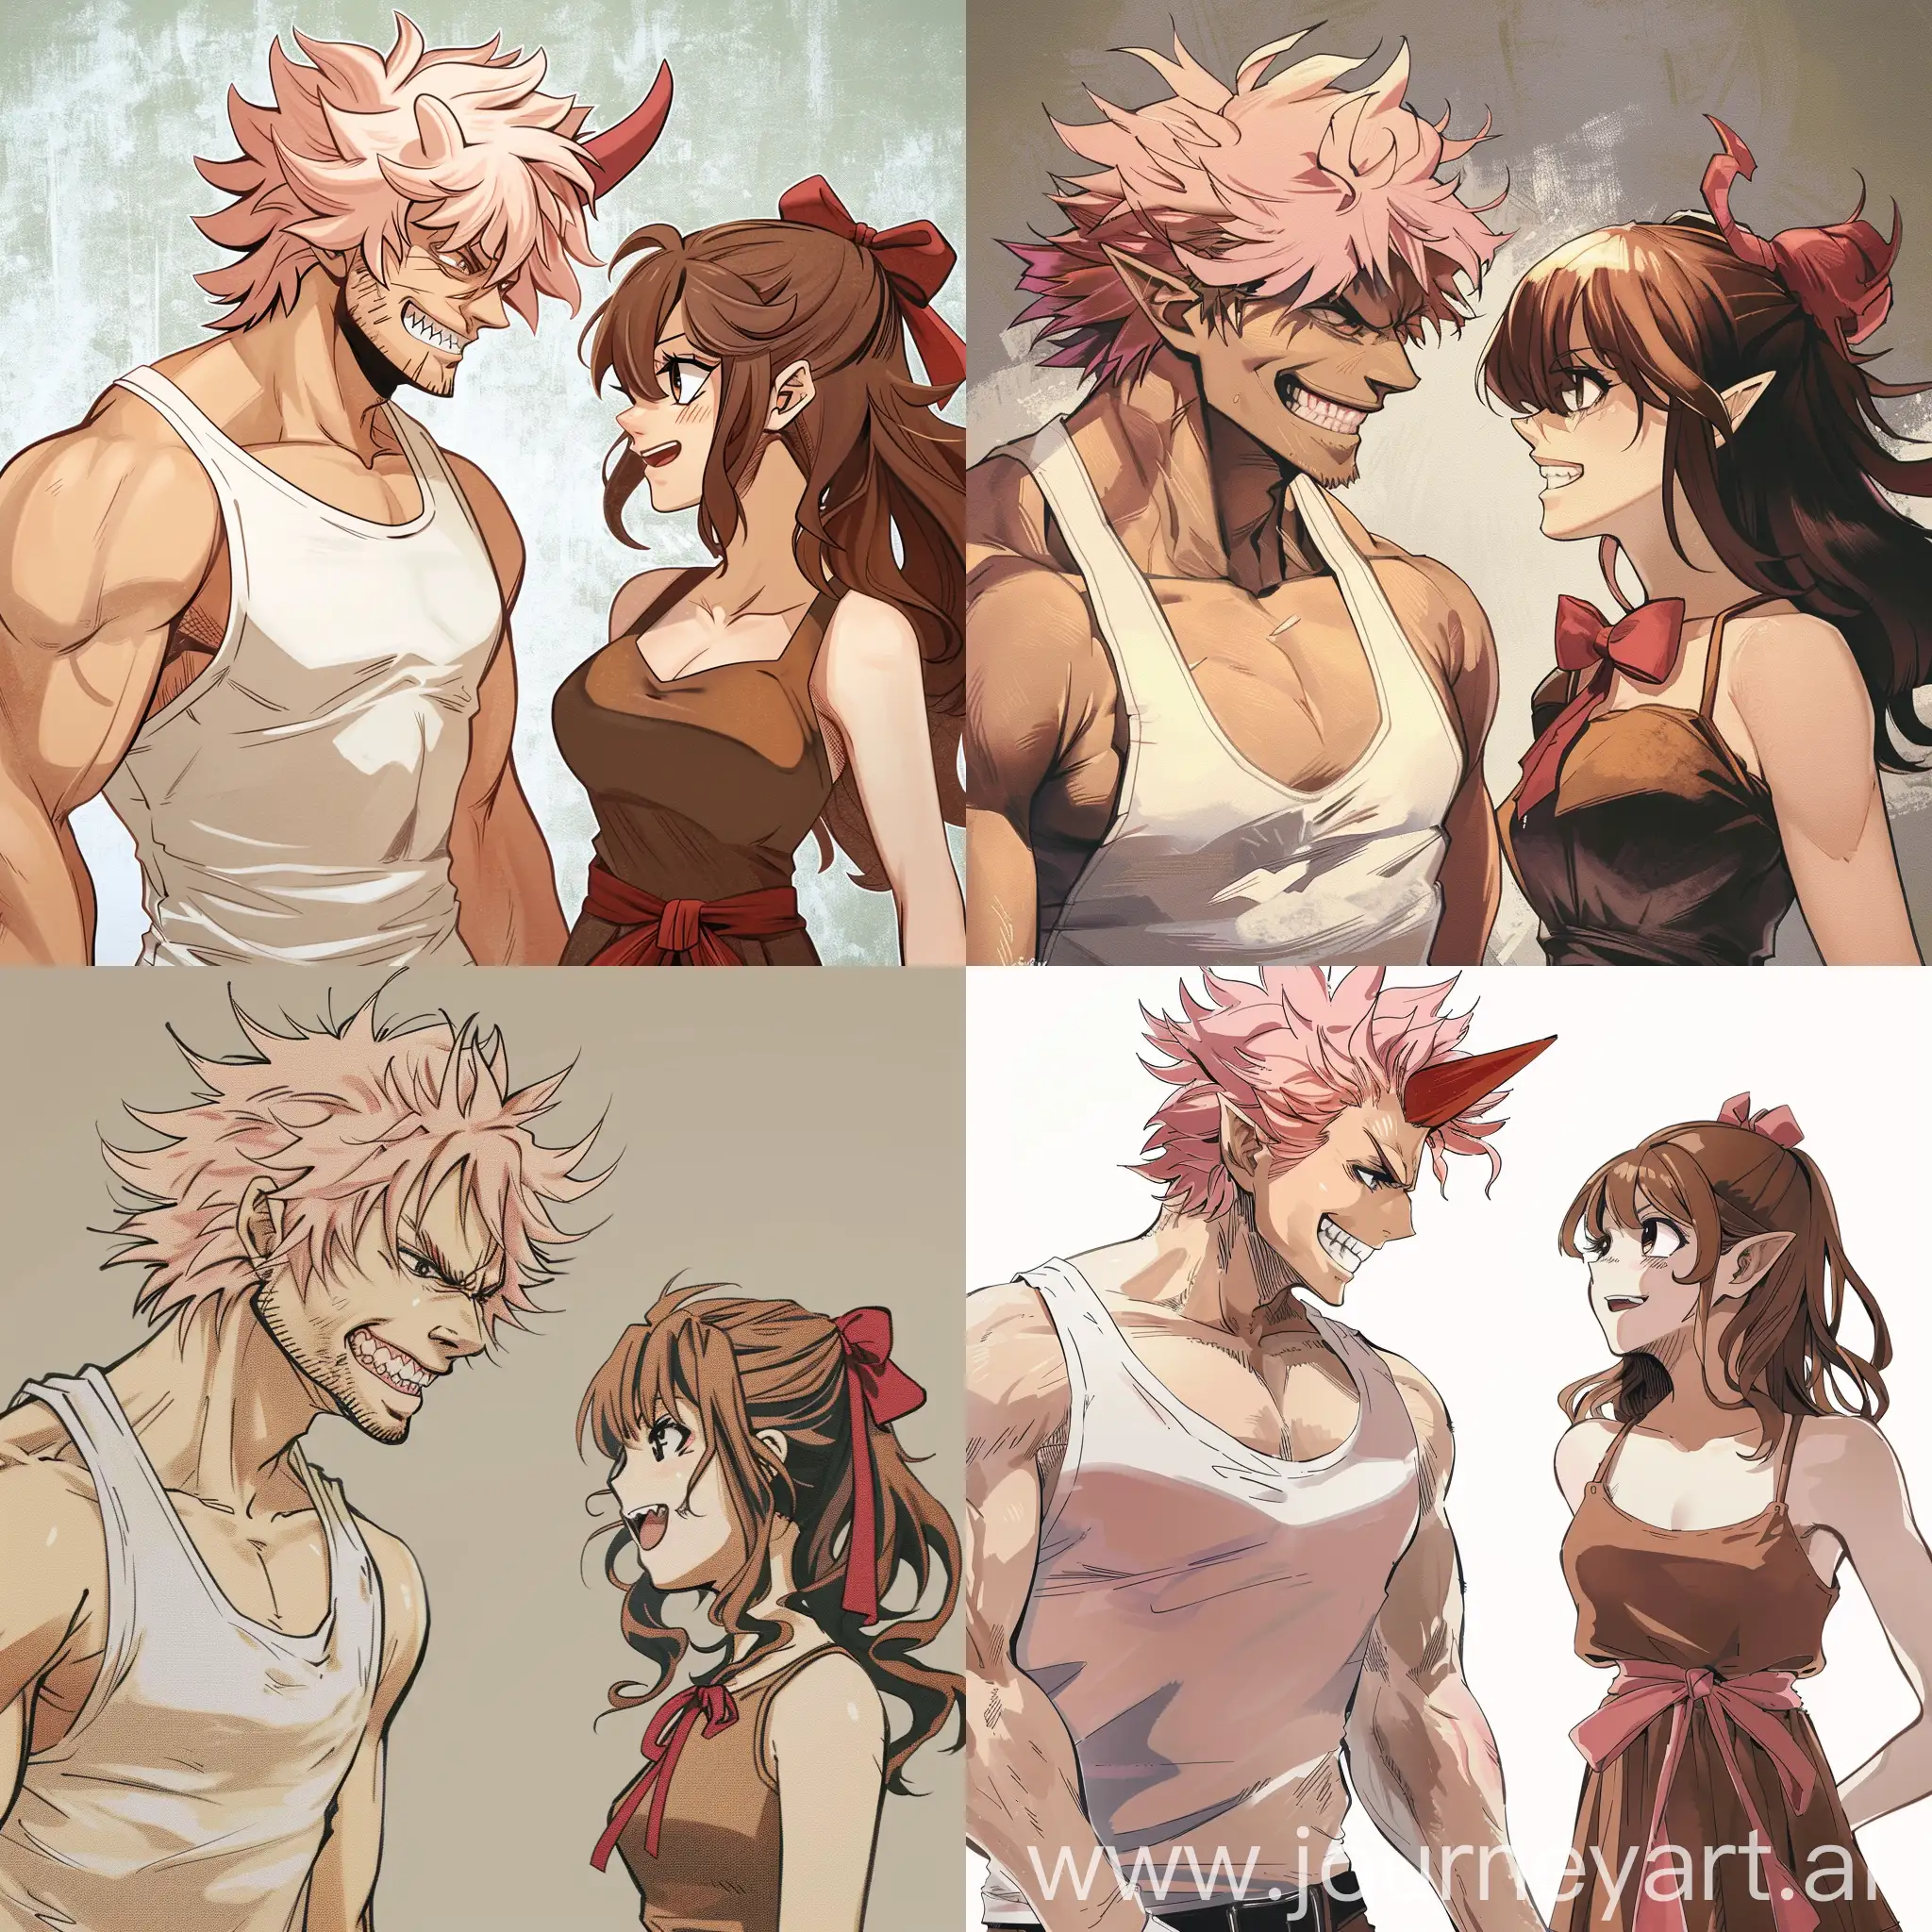 Manga-Illustration-BlondPinkish-Haired-Man-Smirking-Beside-BrownHaired-Girl-in-Red-Ribbon-Dress